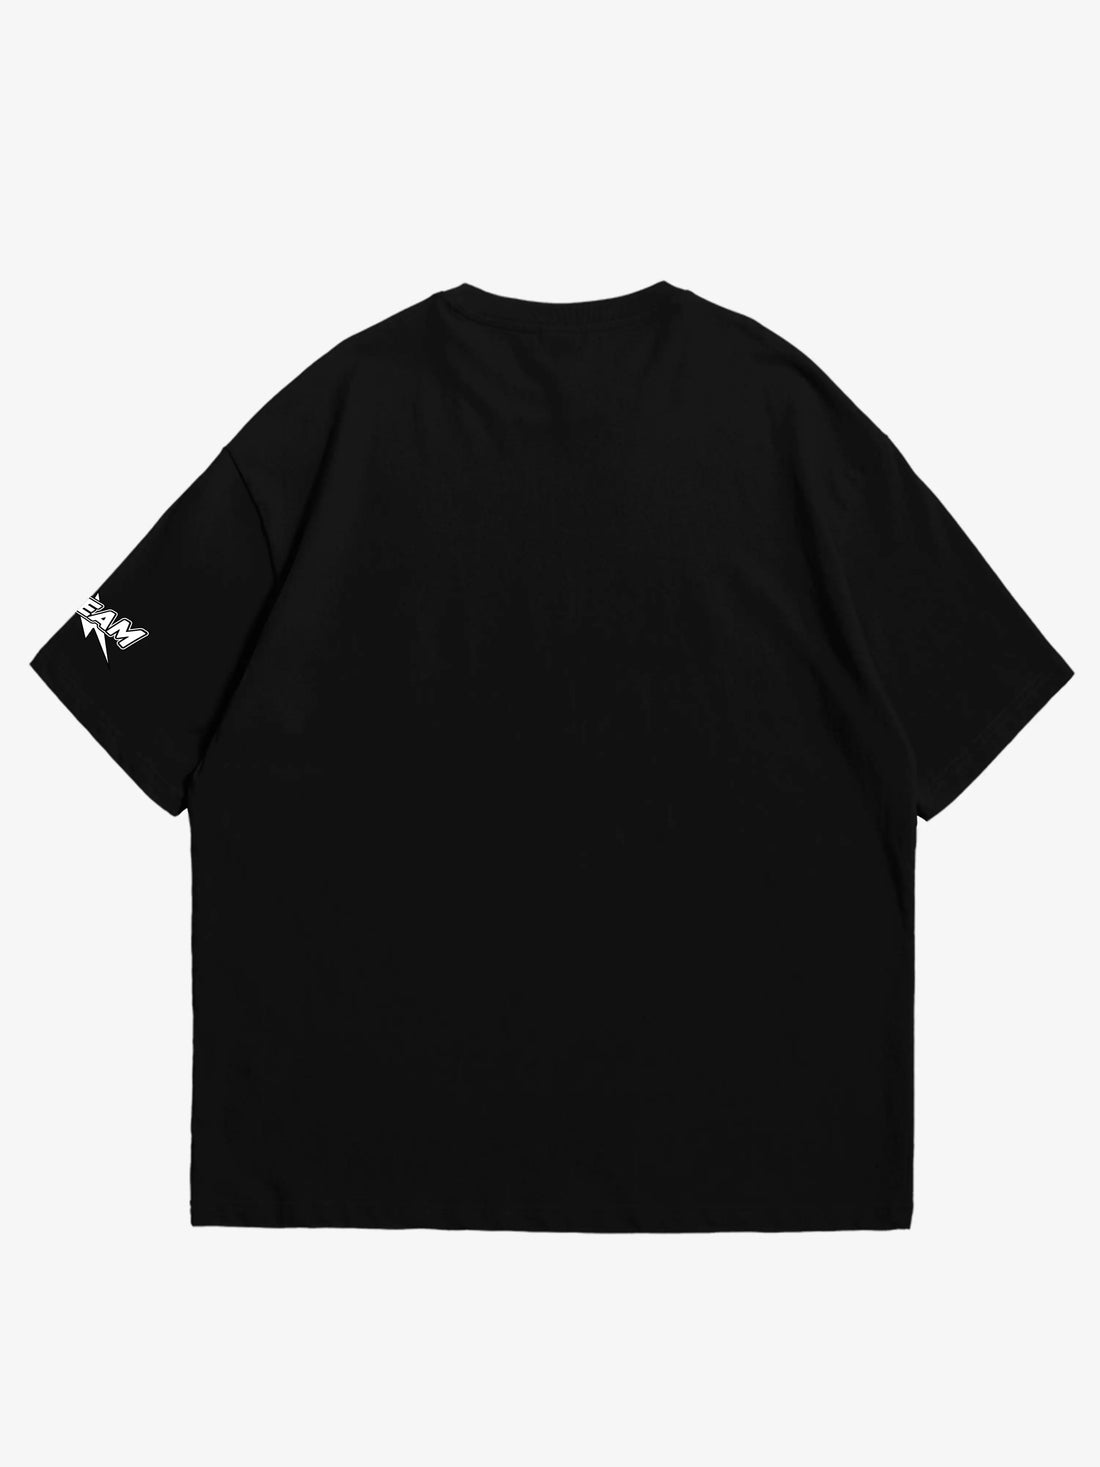 Black oversized T-shirt, dark y2k print, skream streetwear t-shirt 